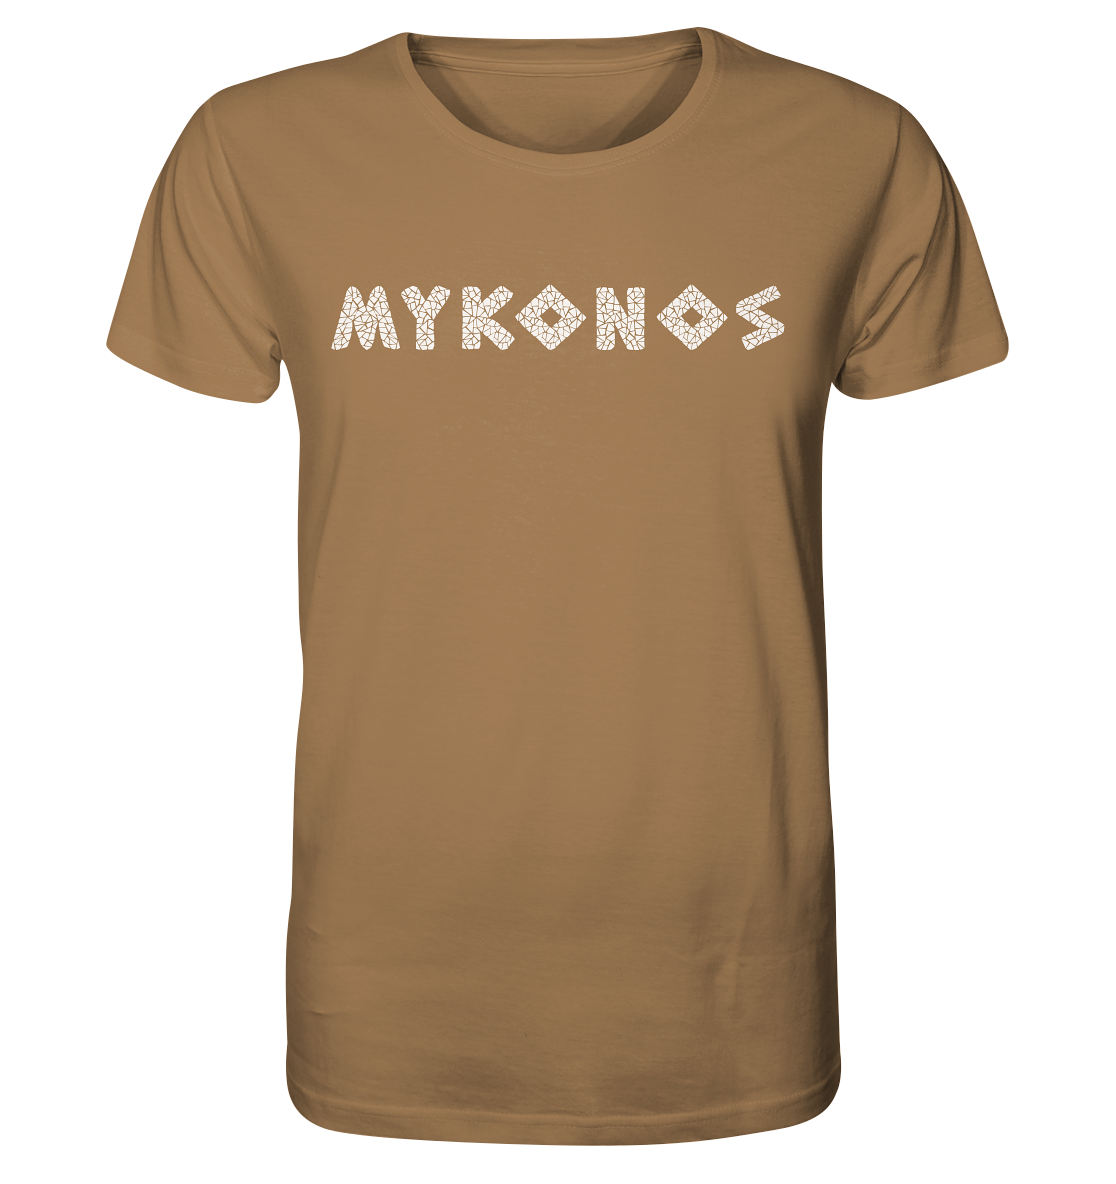 Mykonos Mosaic - Organic Shirt